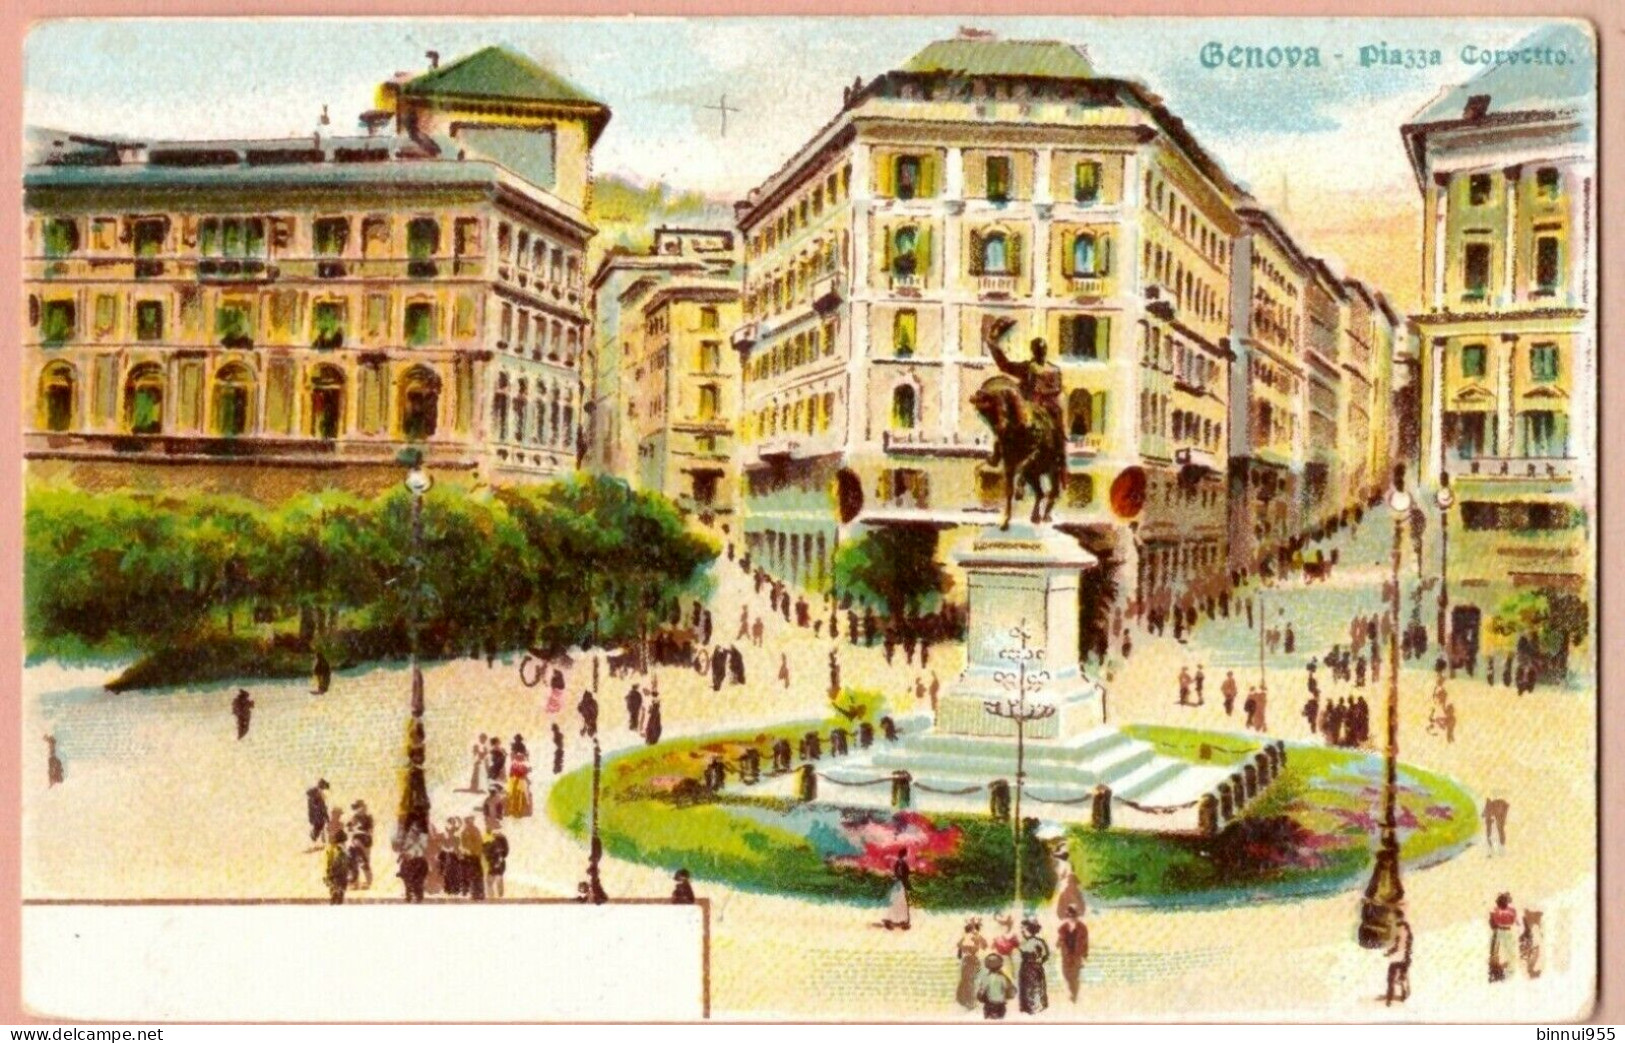 Cartolina Genova Piazza Corvetto - Viaggiata - Genova (Genoa)